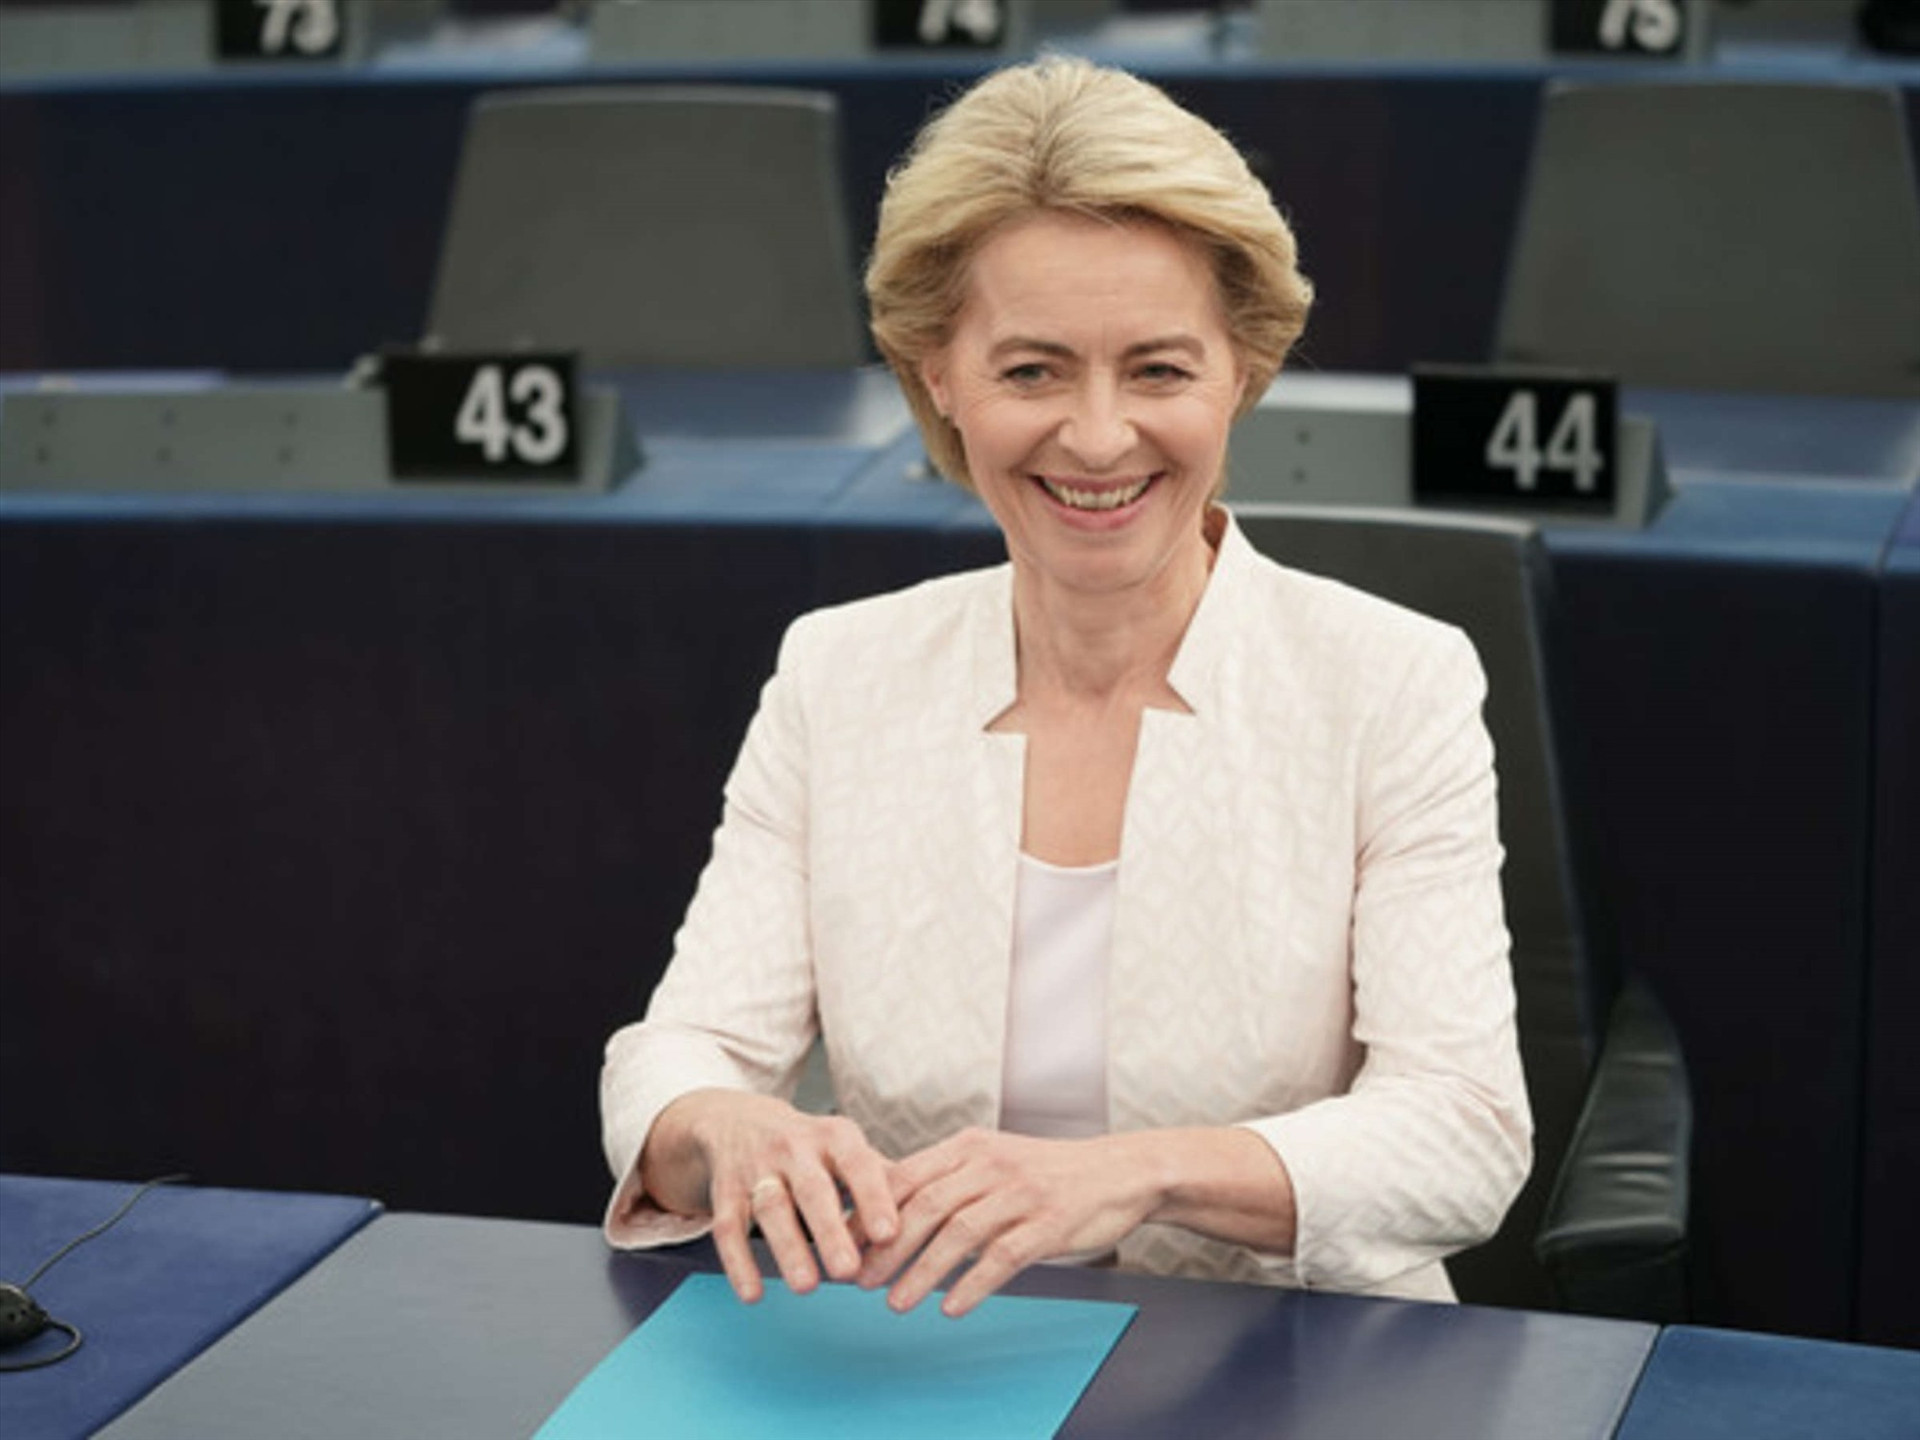 Chủ tịch EC Ursula von der Leyen. Ảnh: © dpa